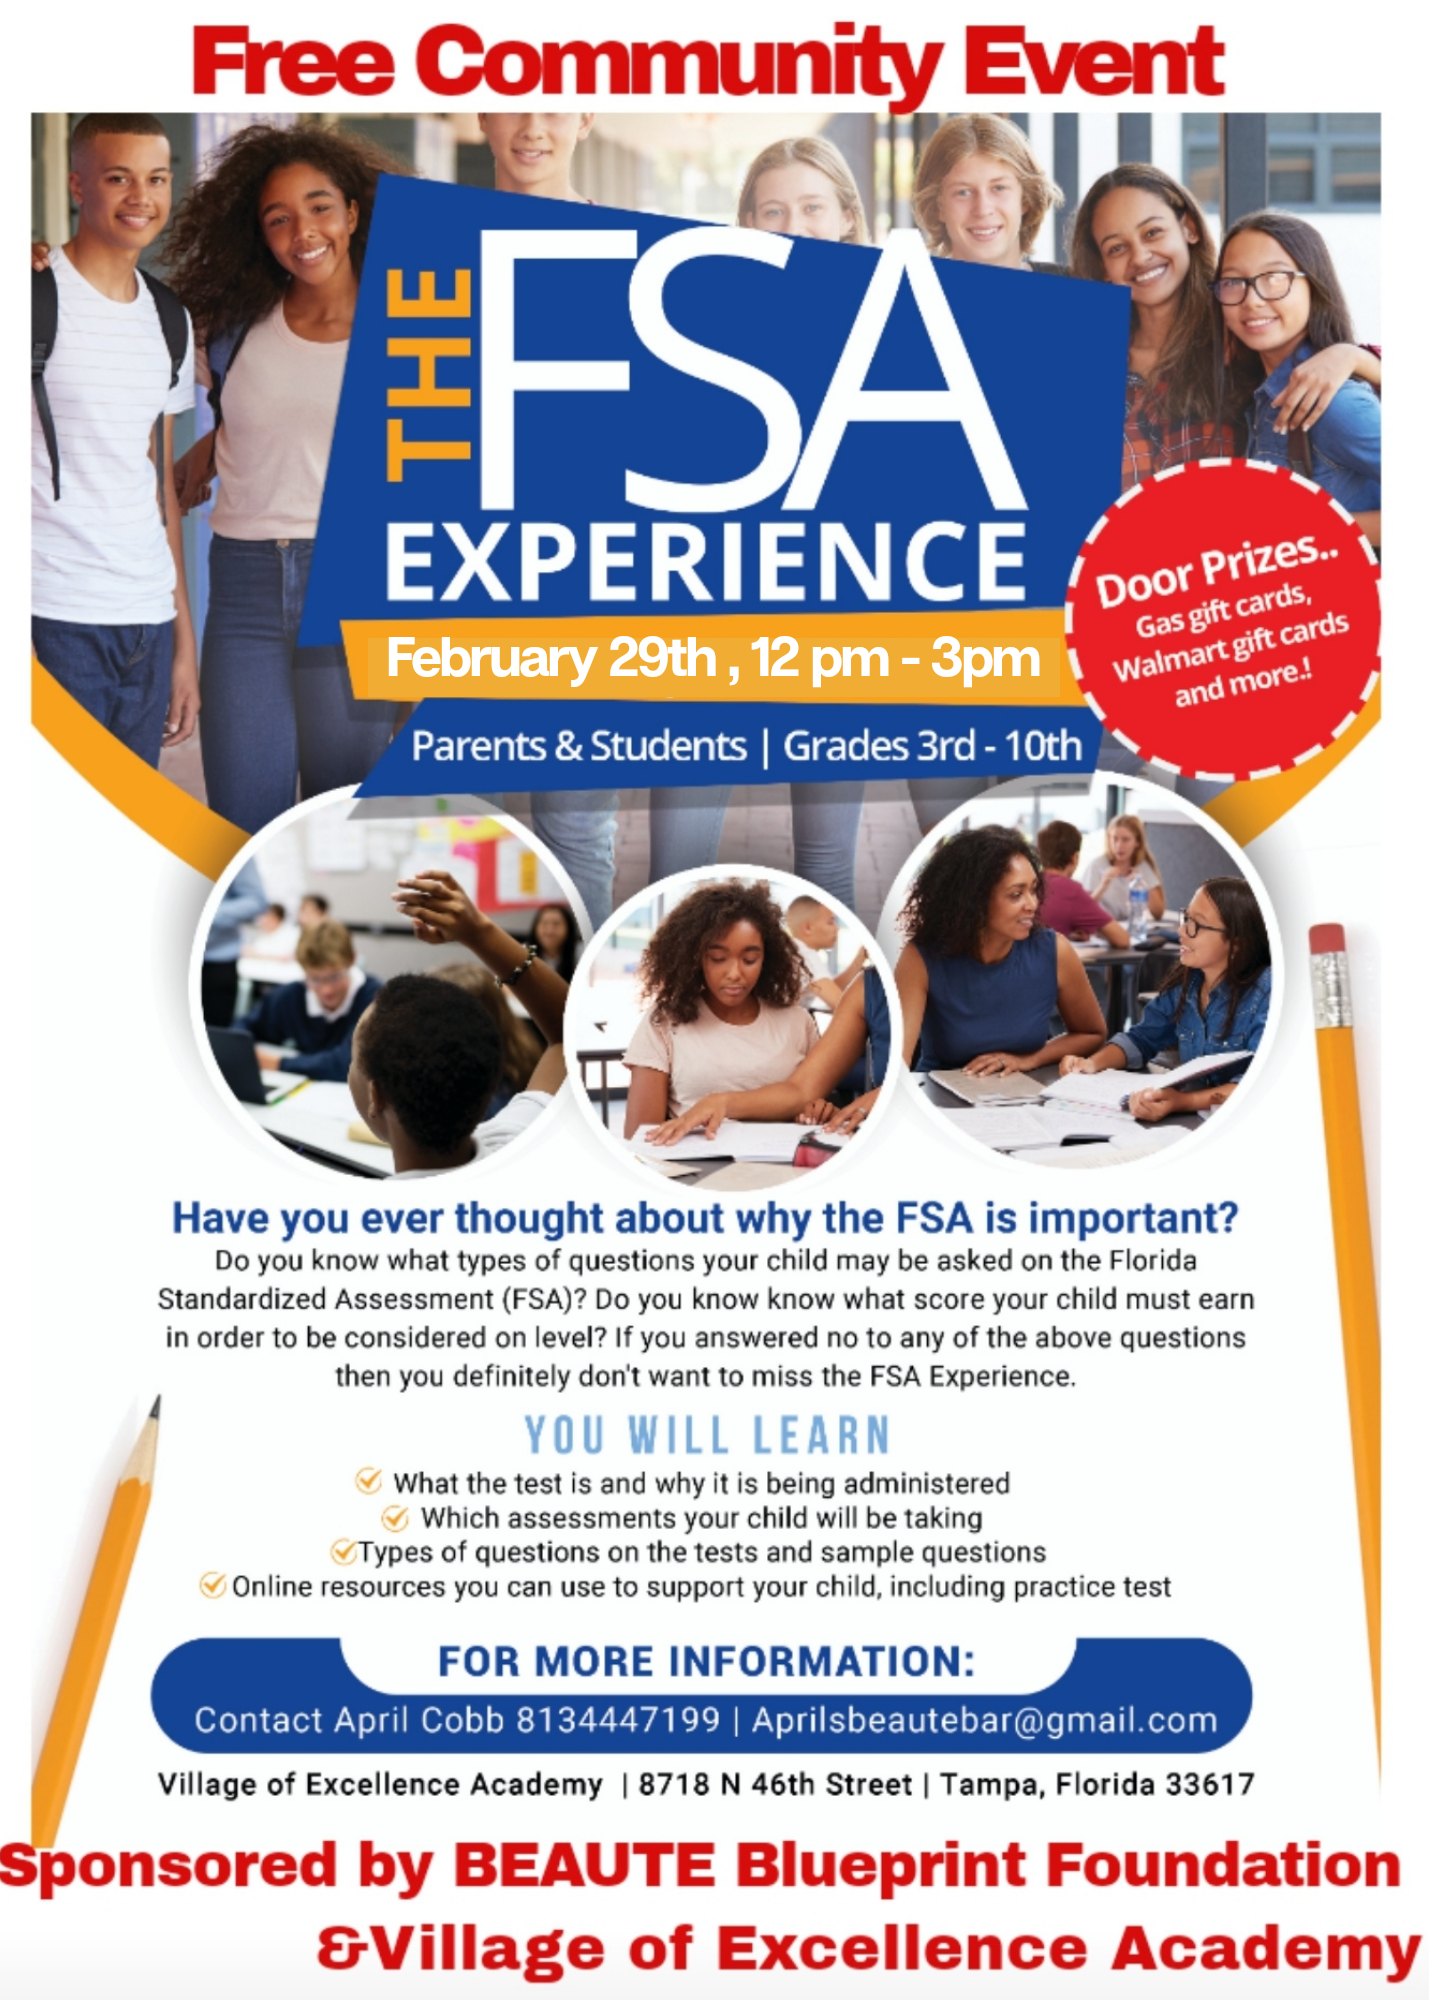 The FSA Experience